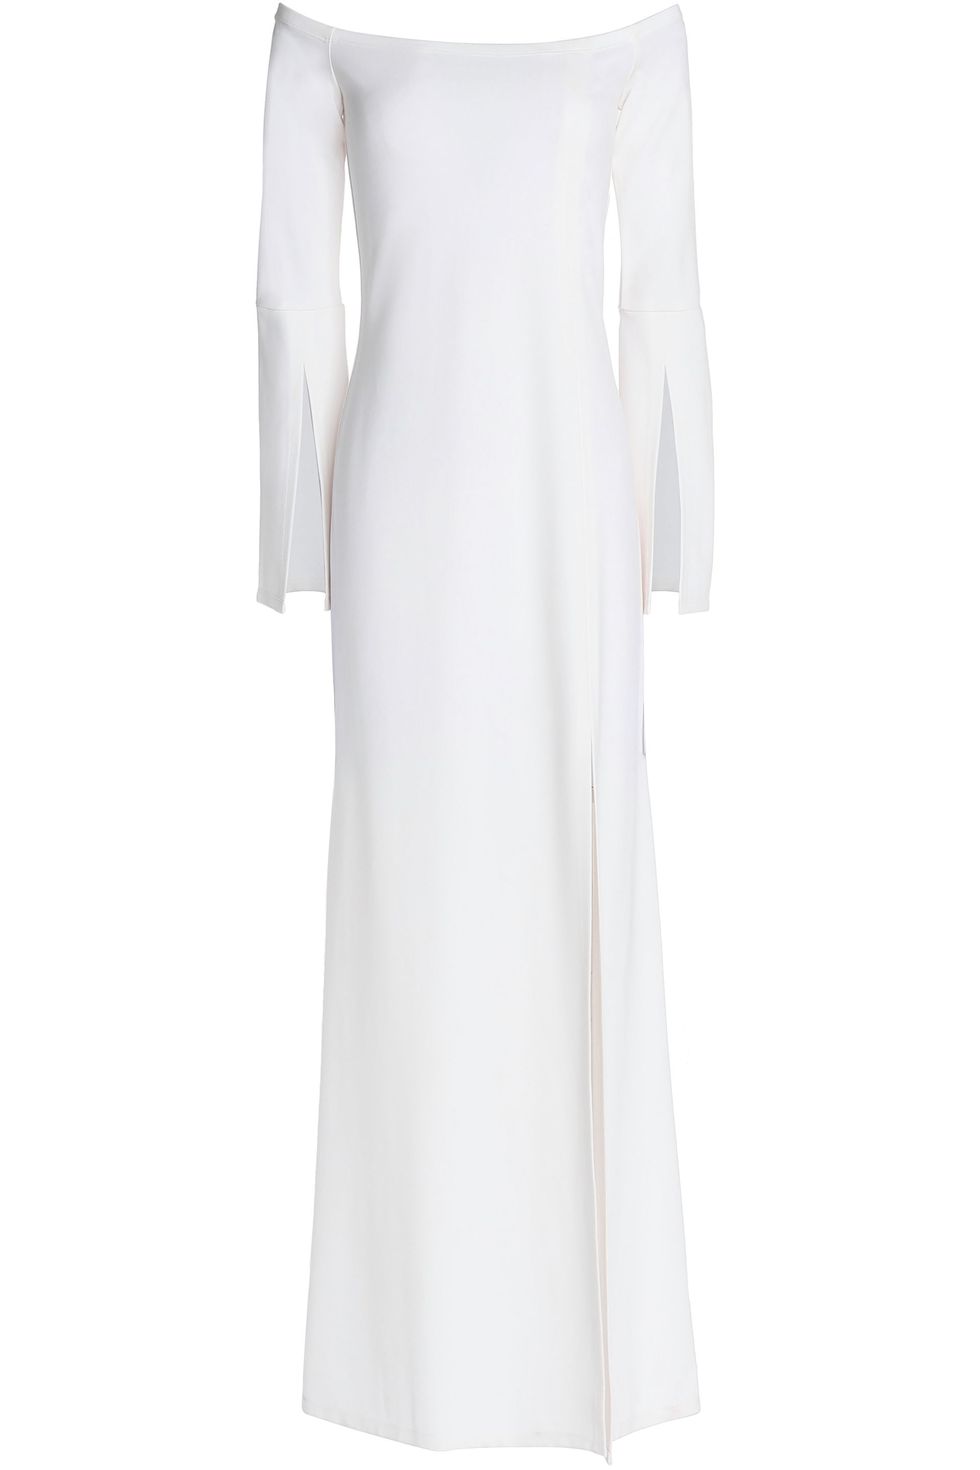 Meghan Markle Wedding Dress Replicas - 10 Wedding Dresses That Look ...